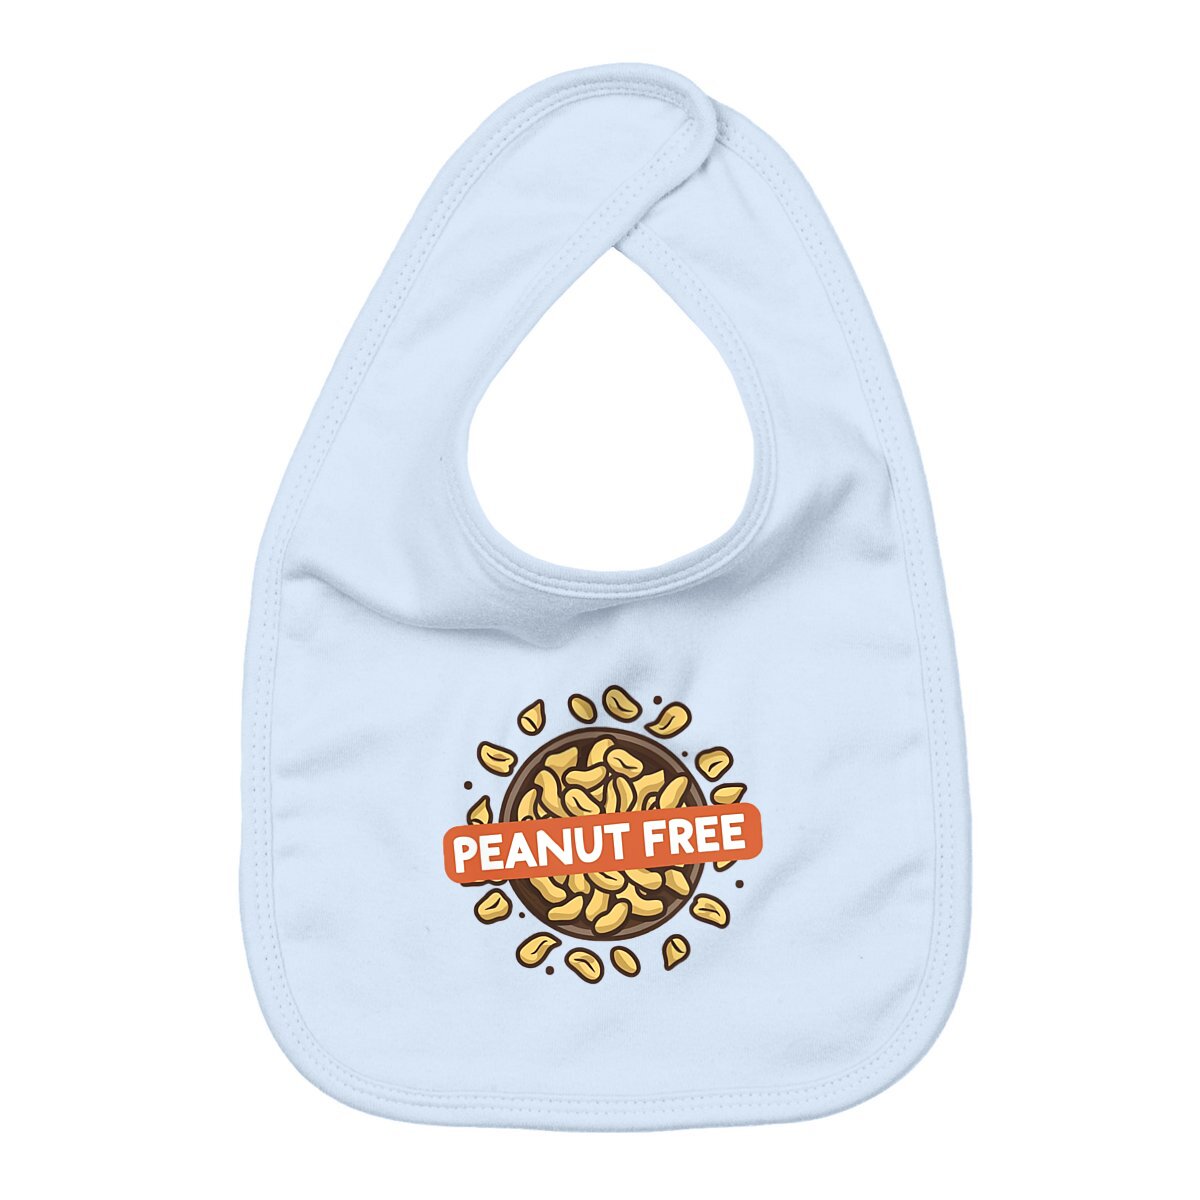 Peanut Free Organic Cotton Graphic Baby Bib | Hypoallergenic - Allergy Friendly - Naturally Free